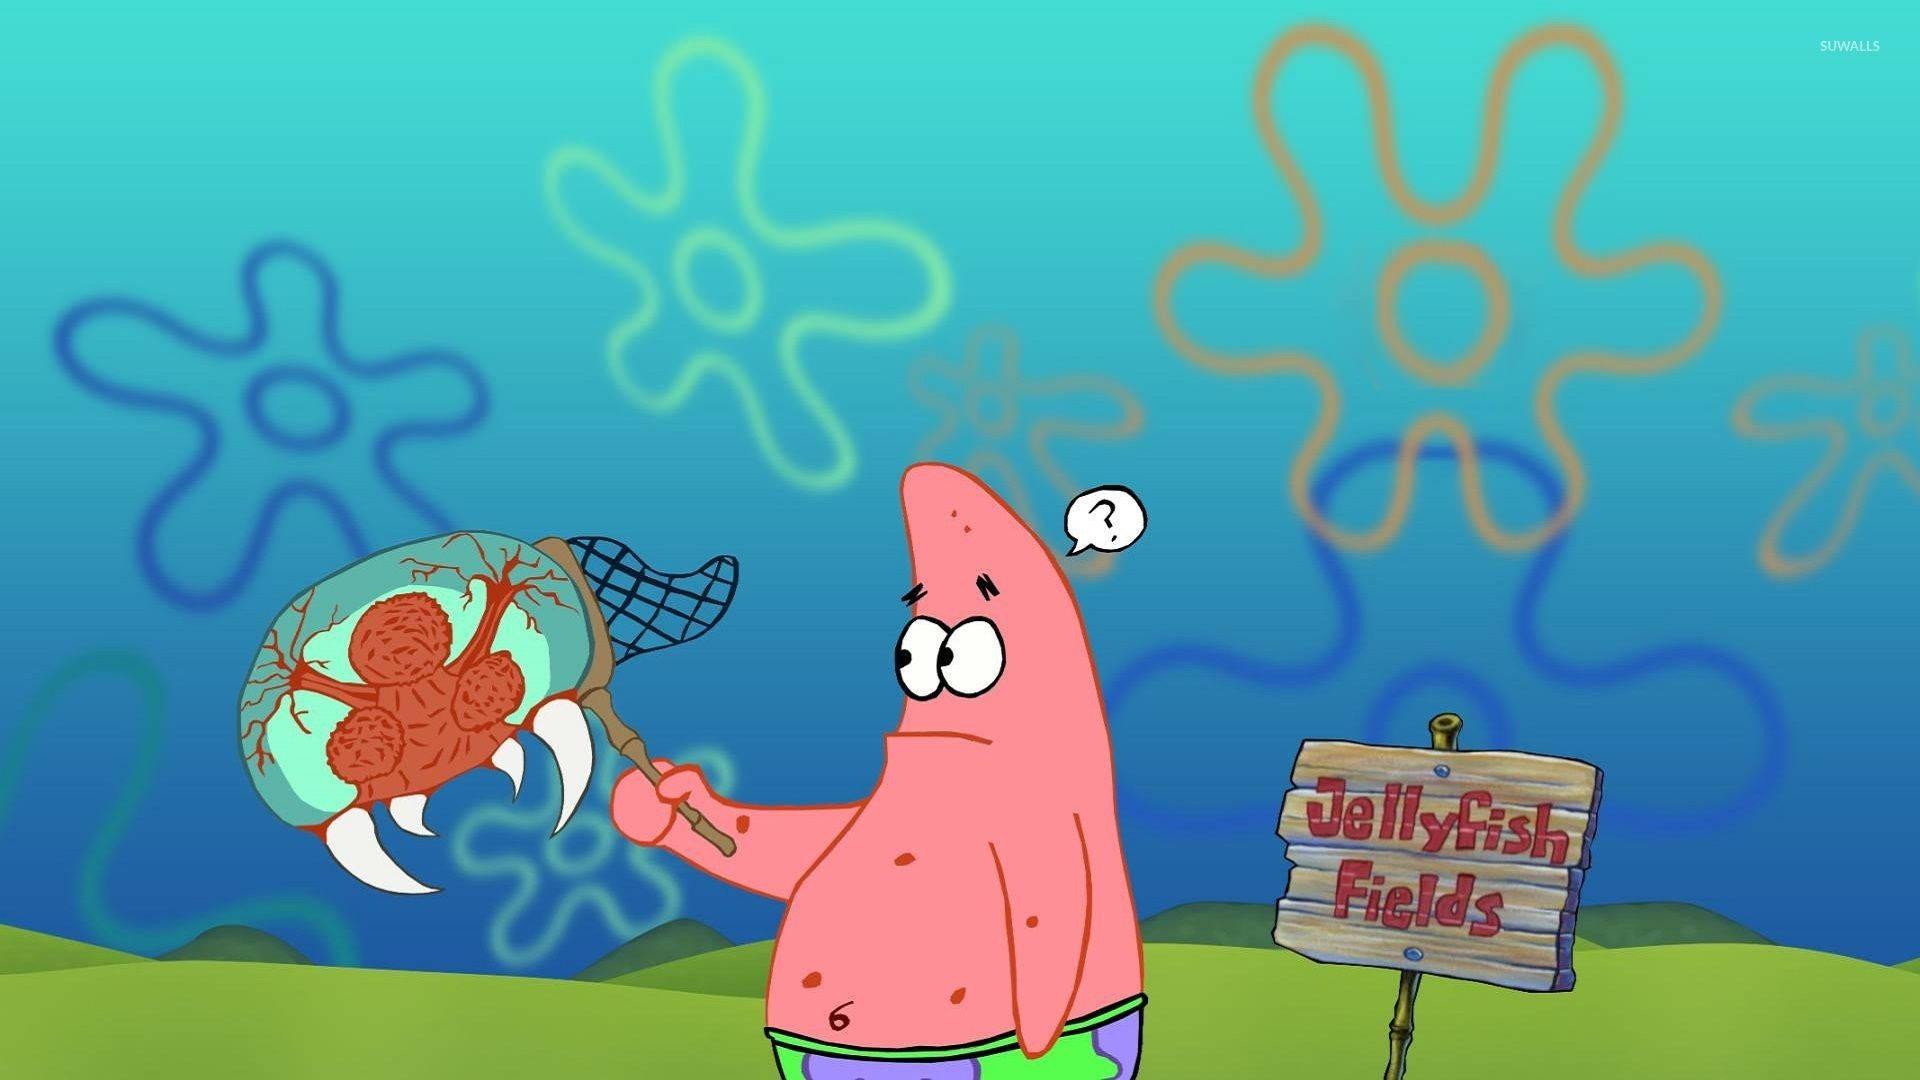 Patrick Star In Jellyfish Fields Background